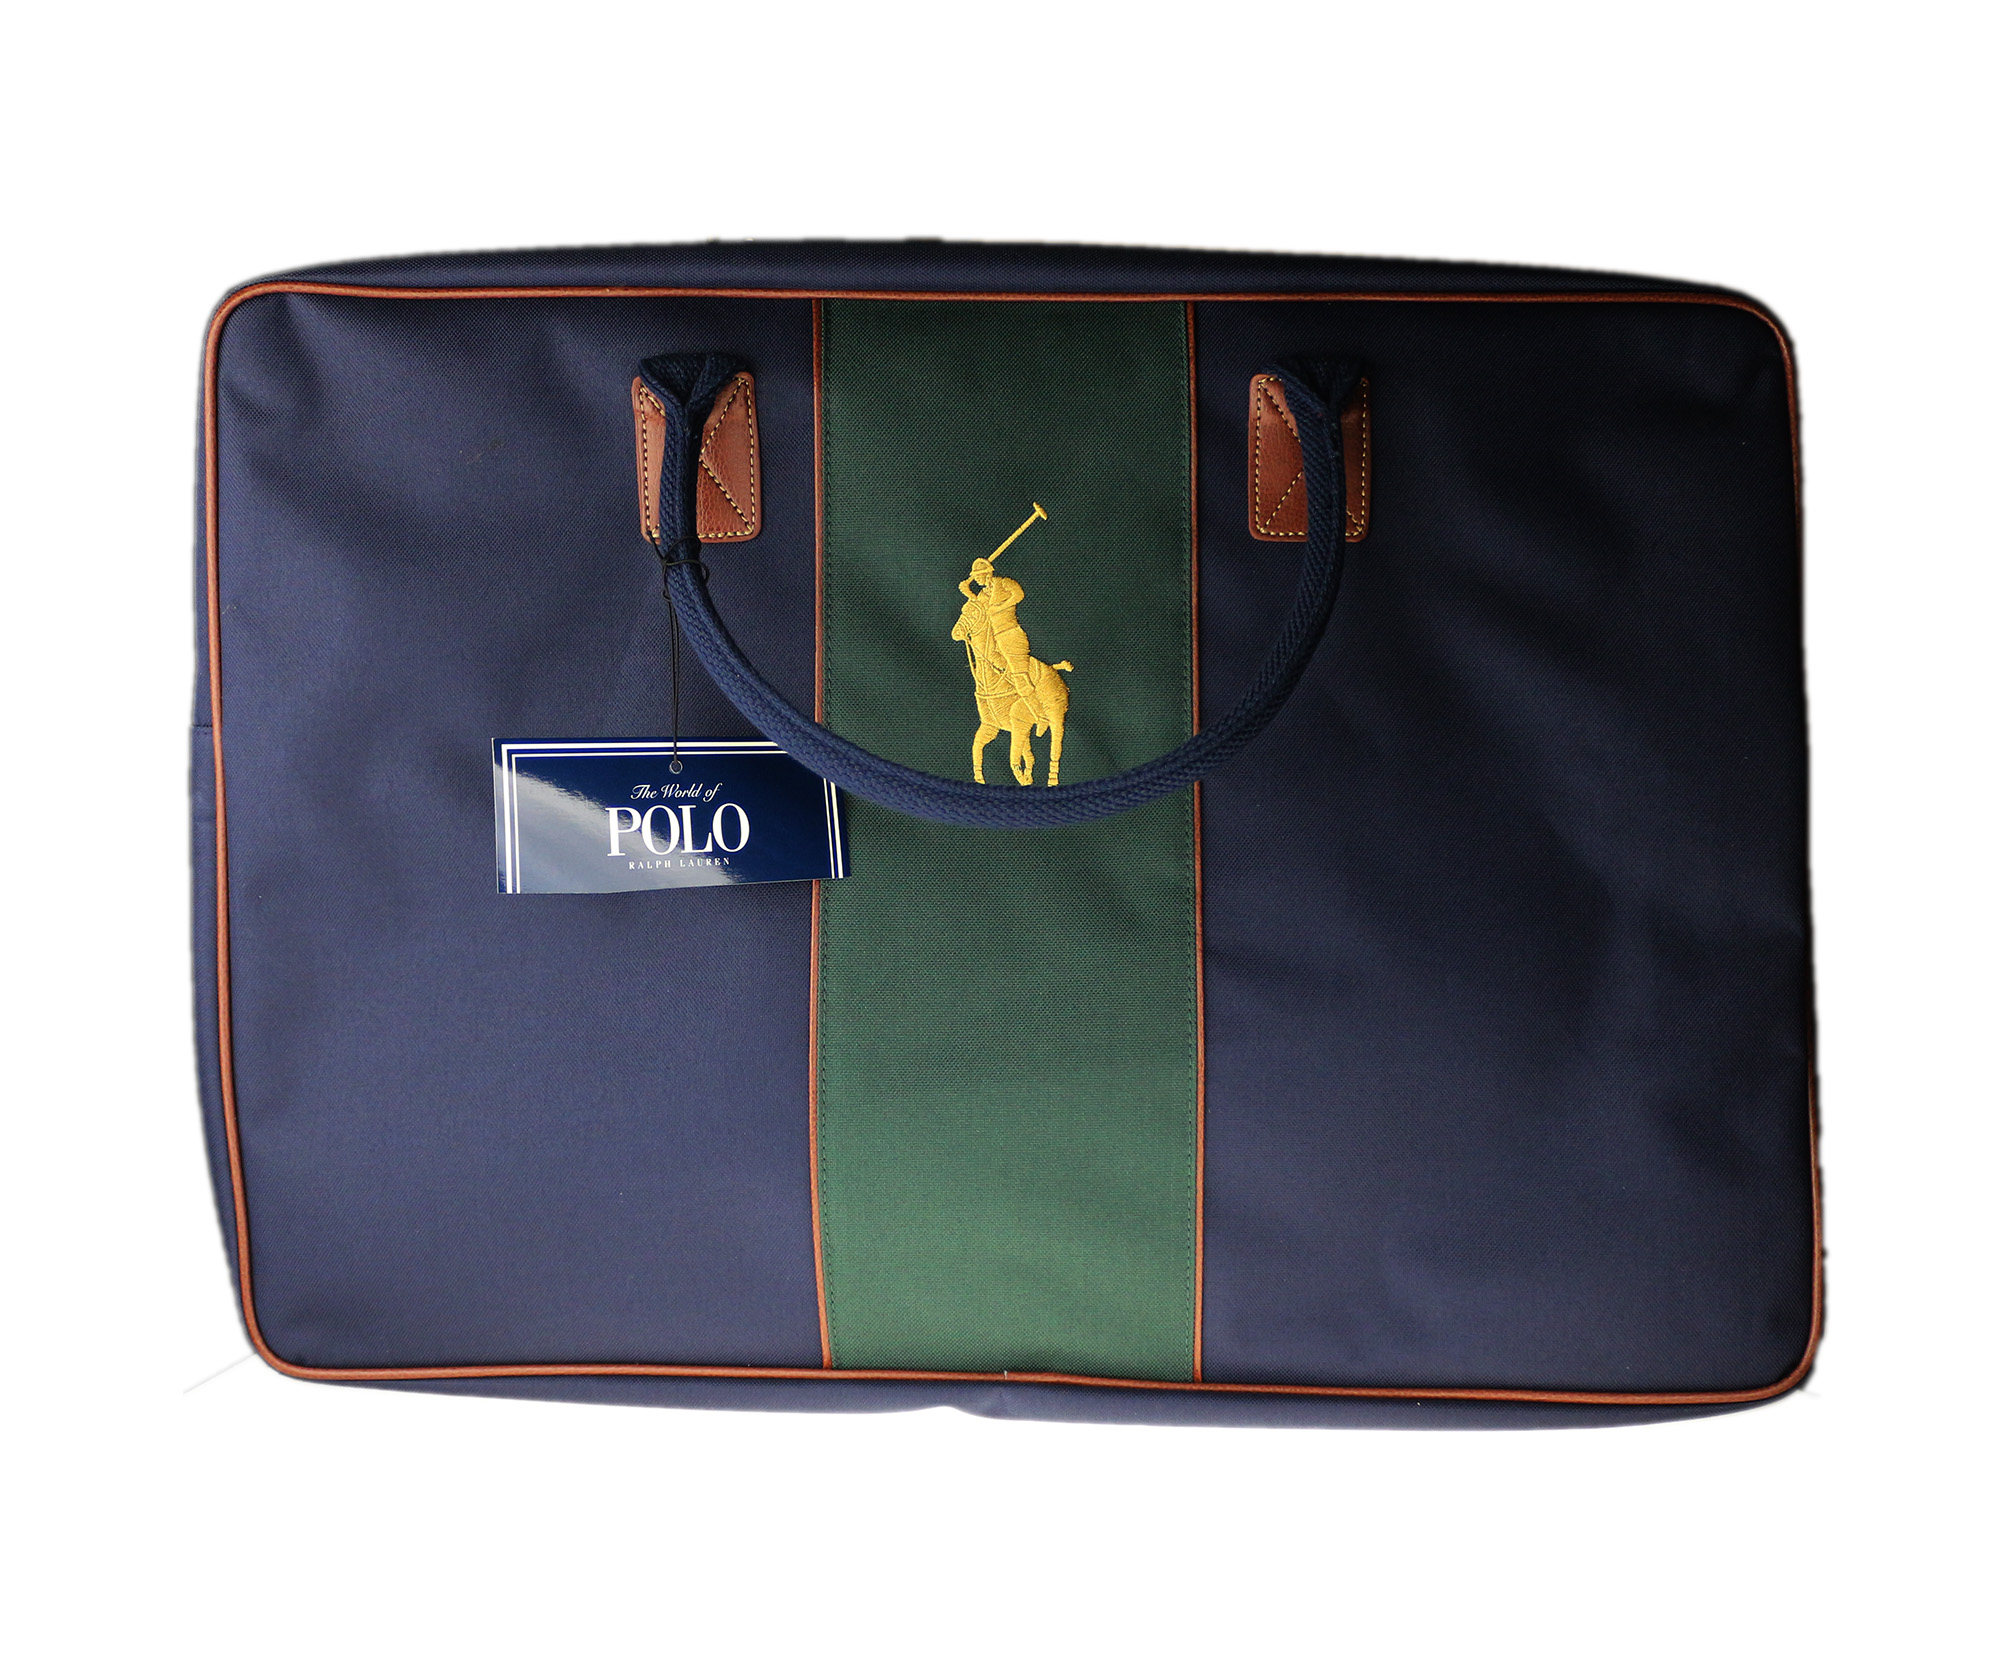 Polo Classic Travel Bag 23 